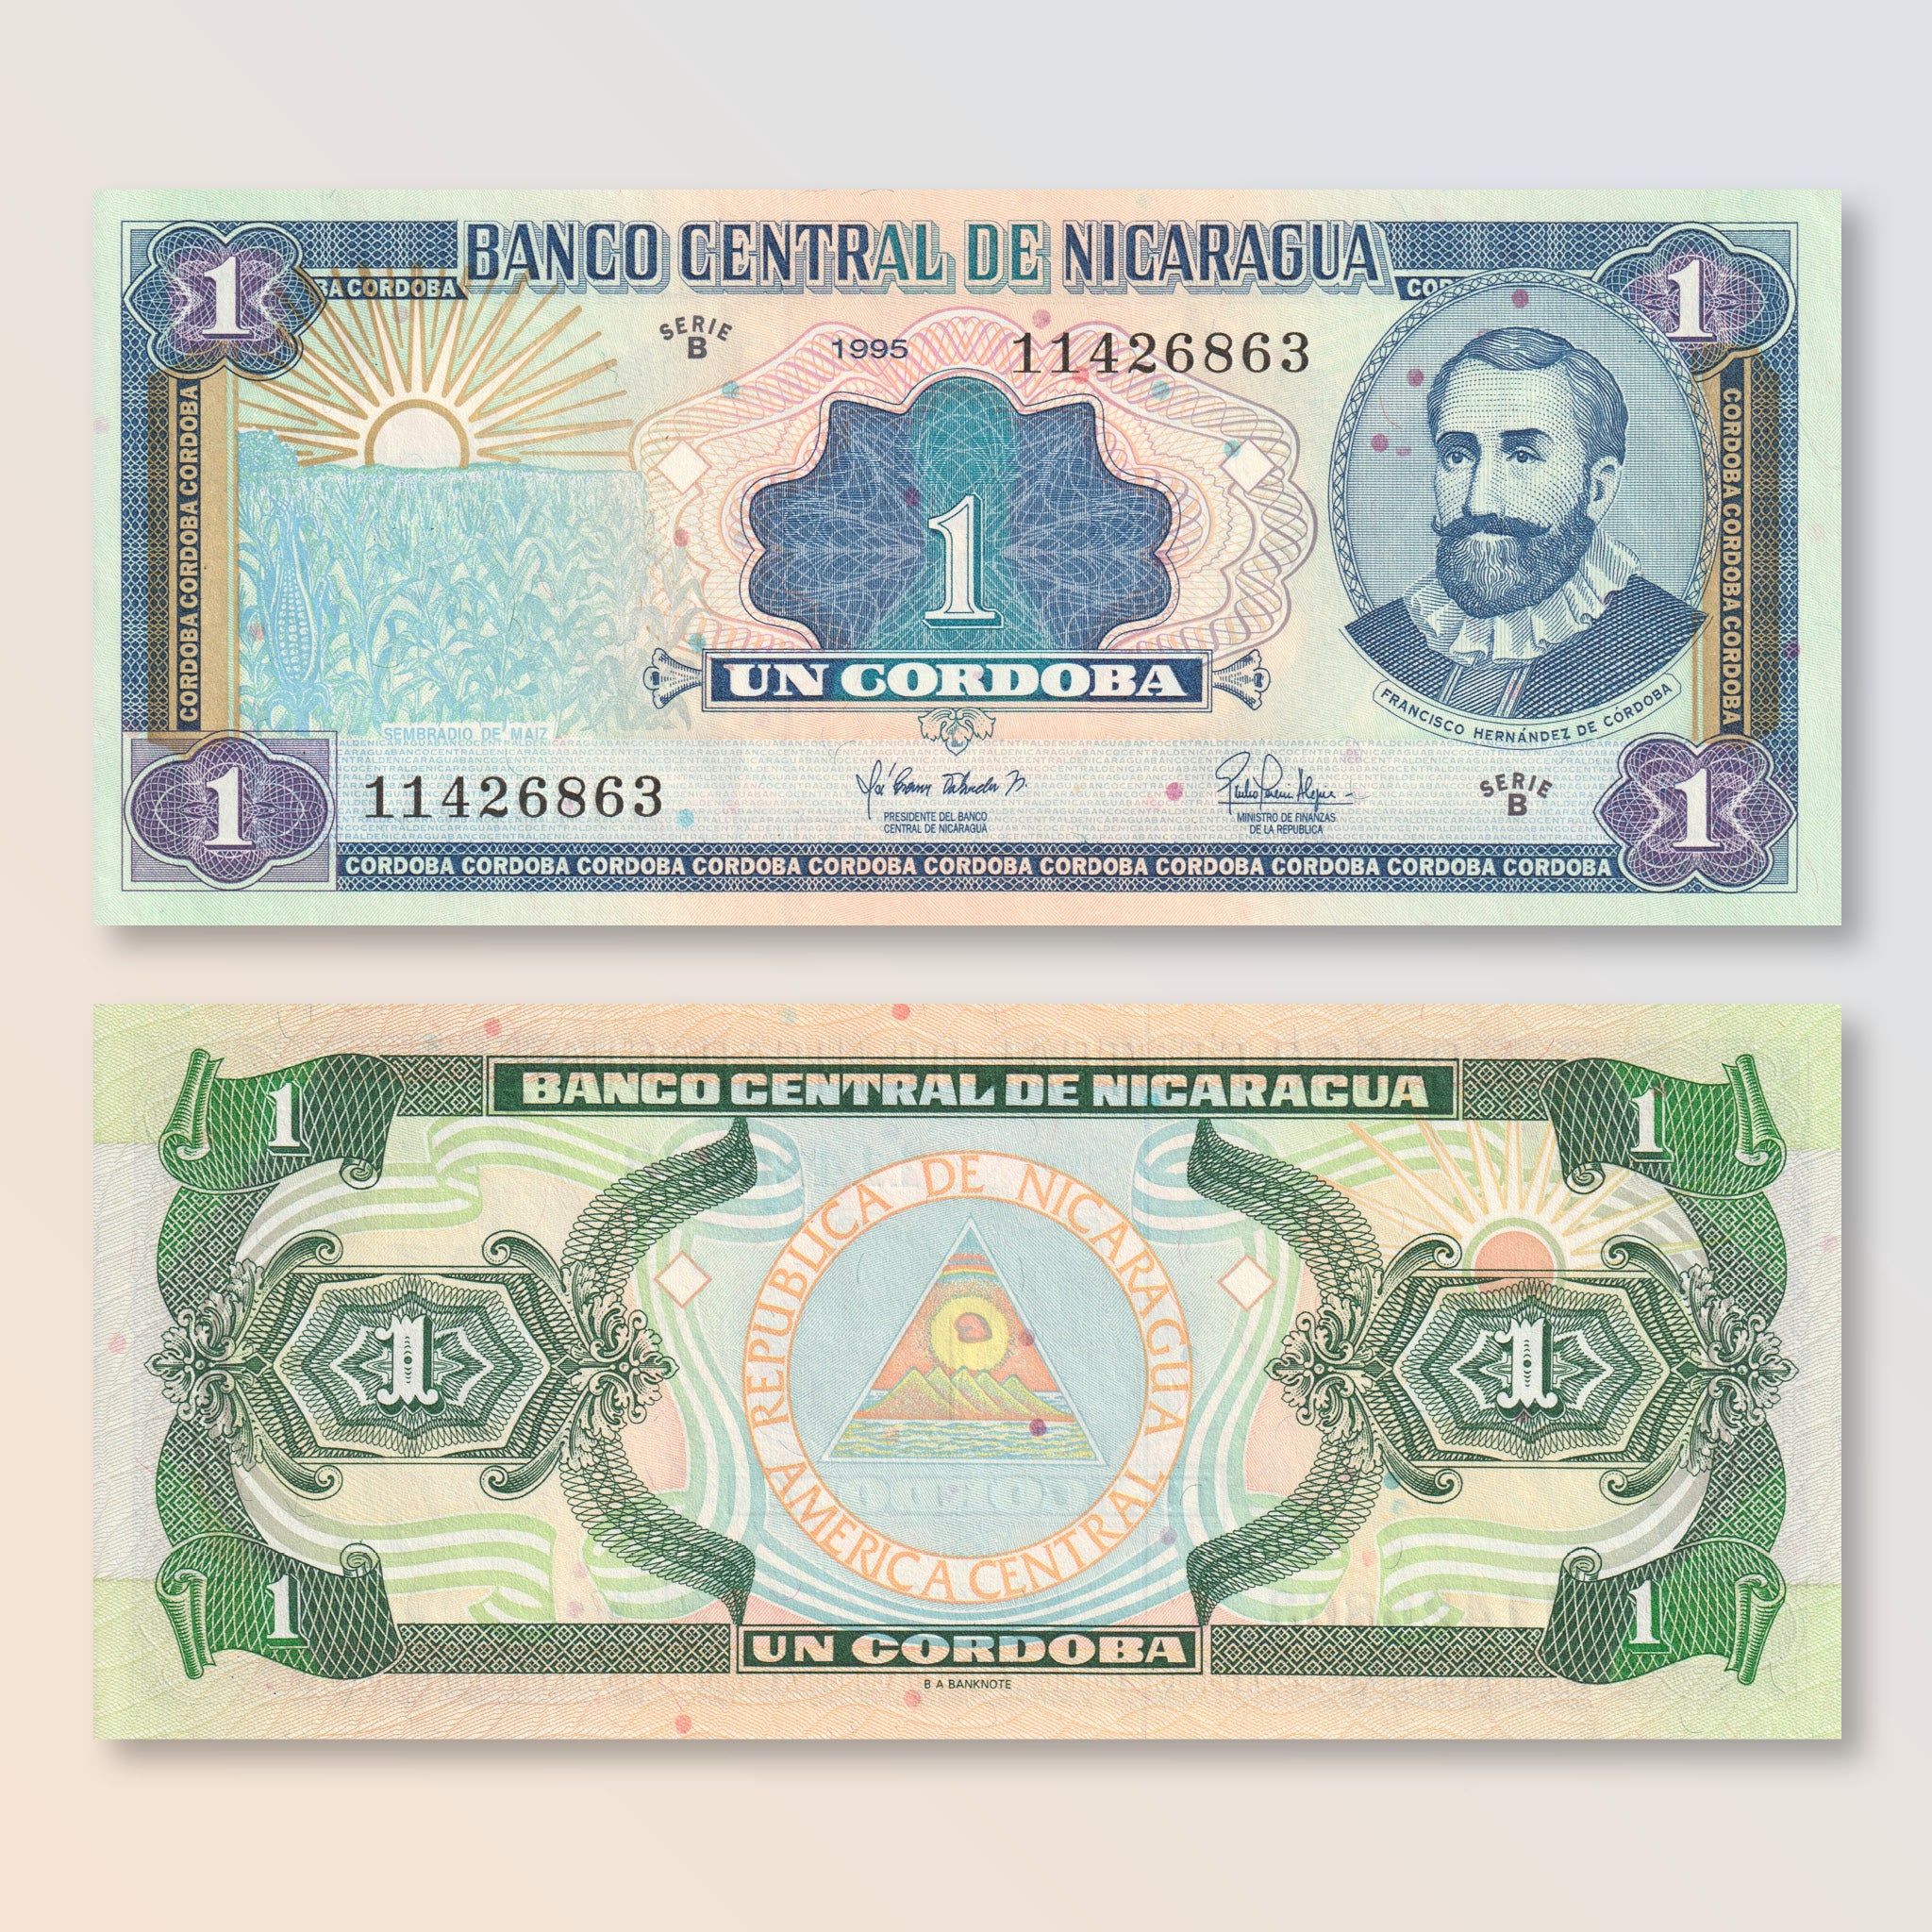 Nicaragua 1 Córdoba, 1995, B475a, P179, UNC - Robert's World Money - World Banknotes